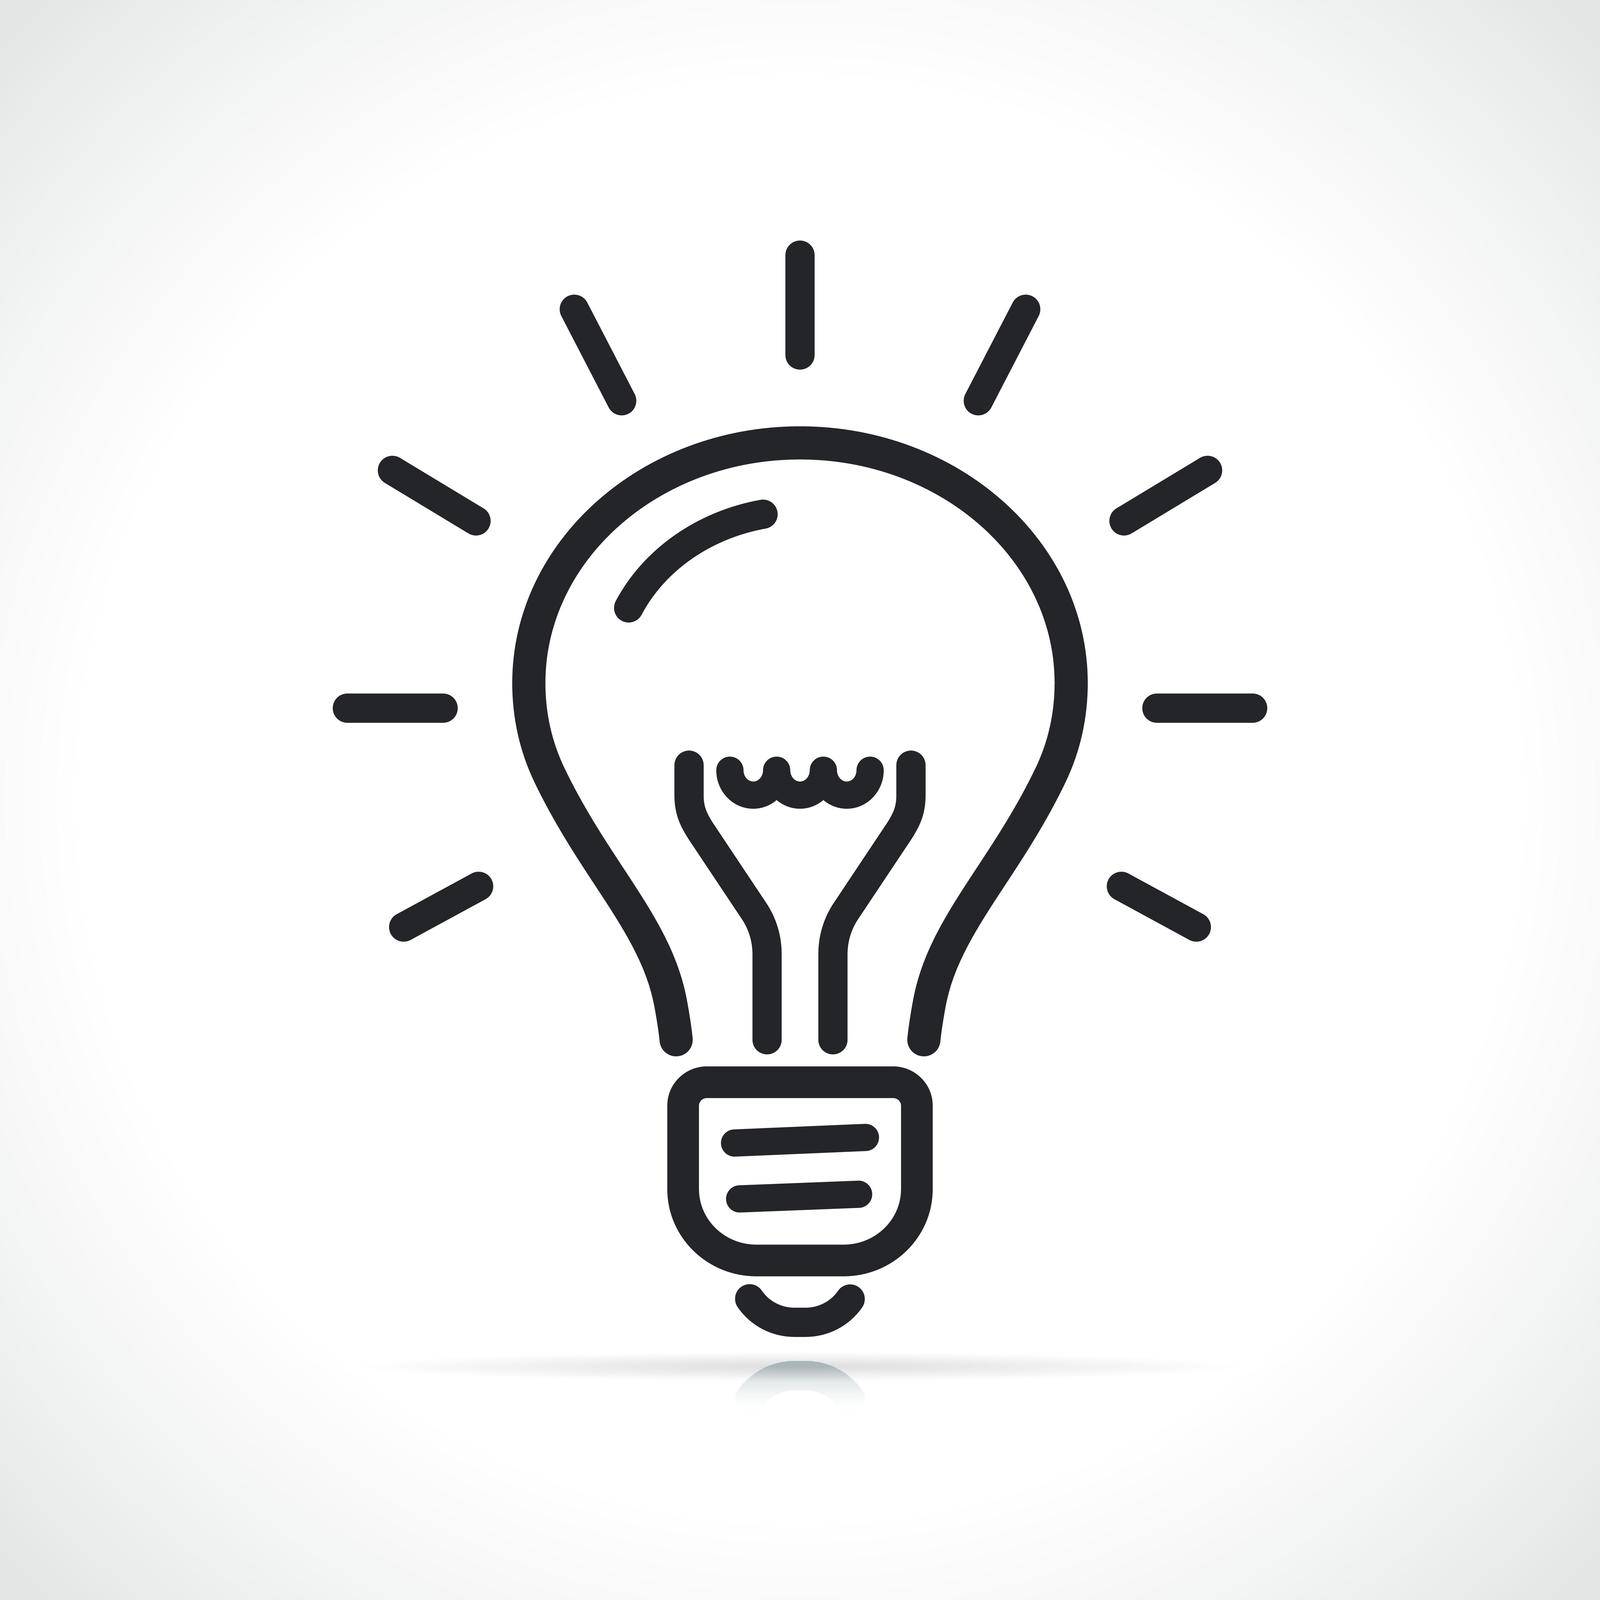 lightbulb or idea line icon by Francois_Poirier